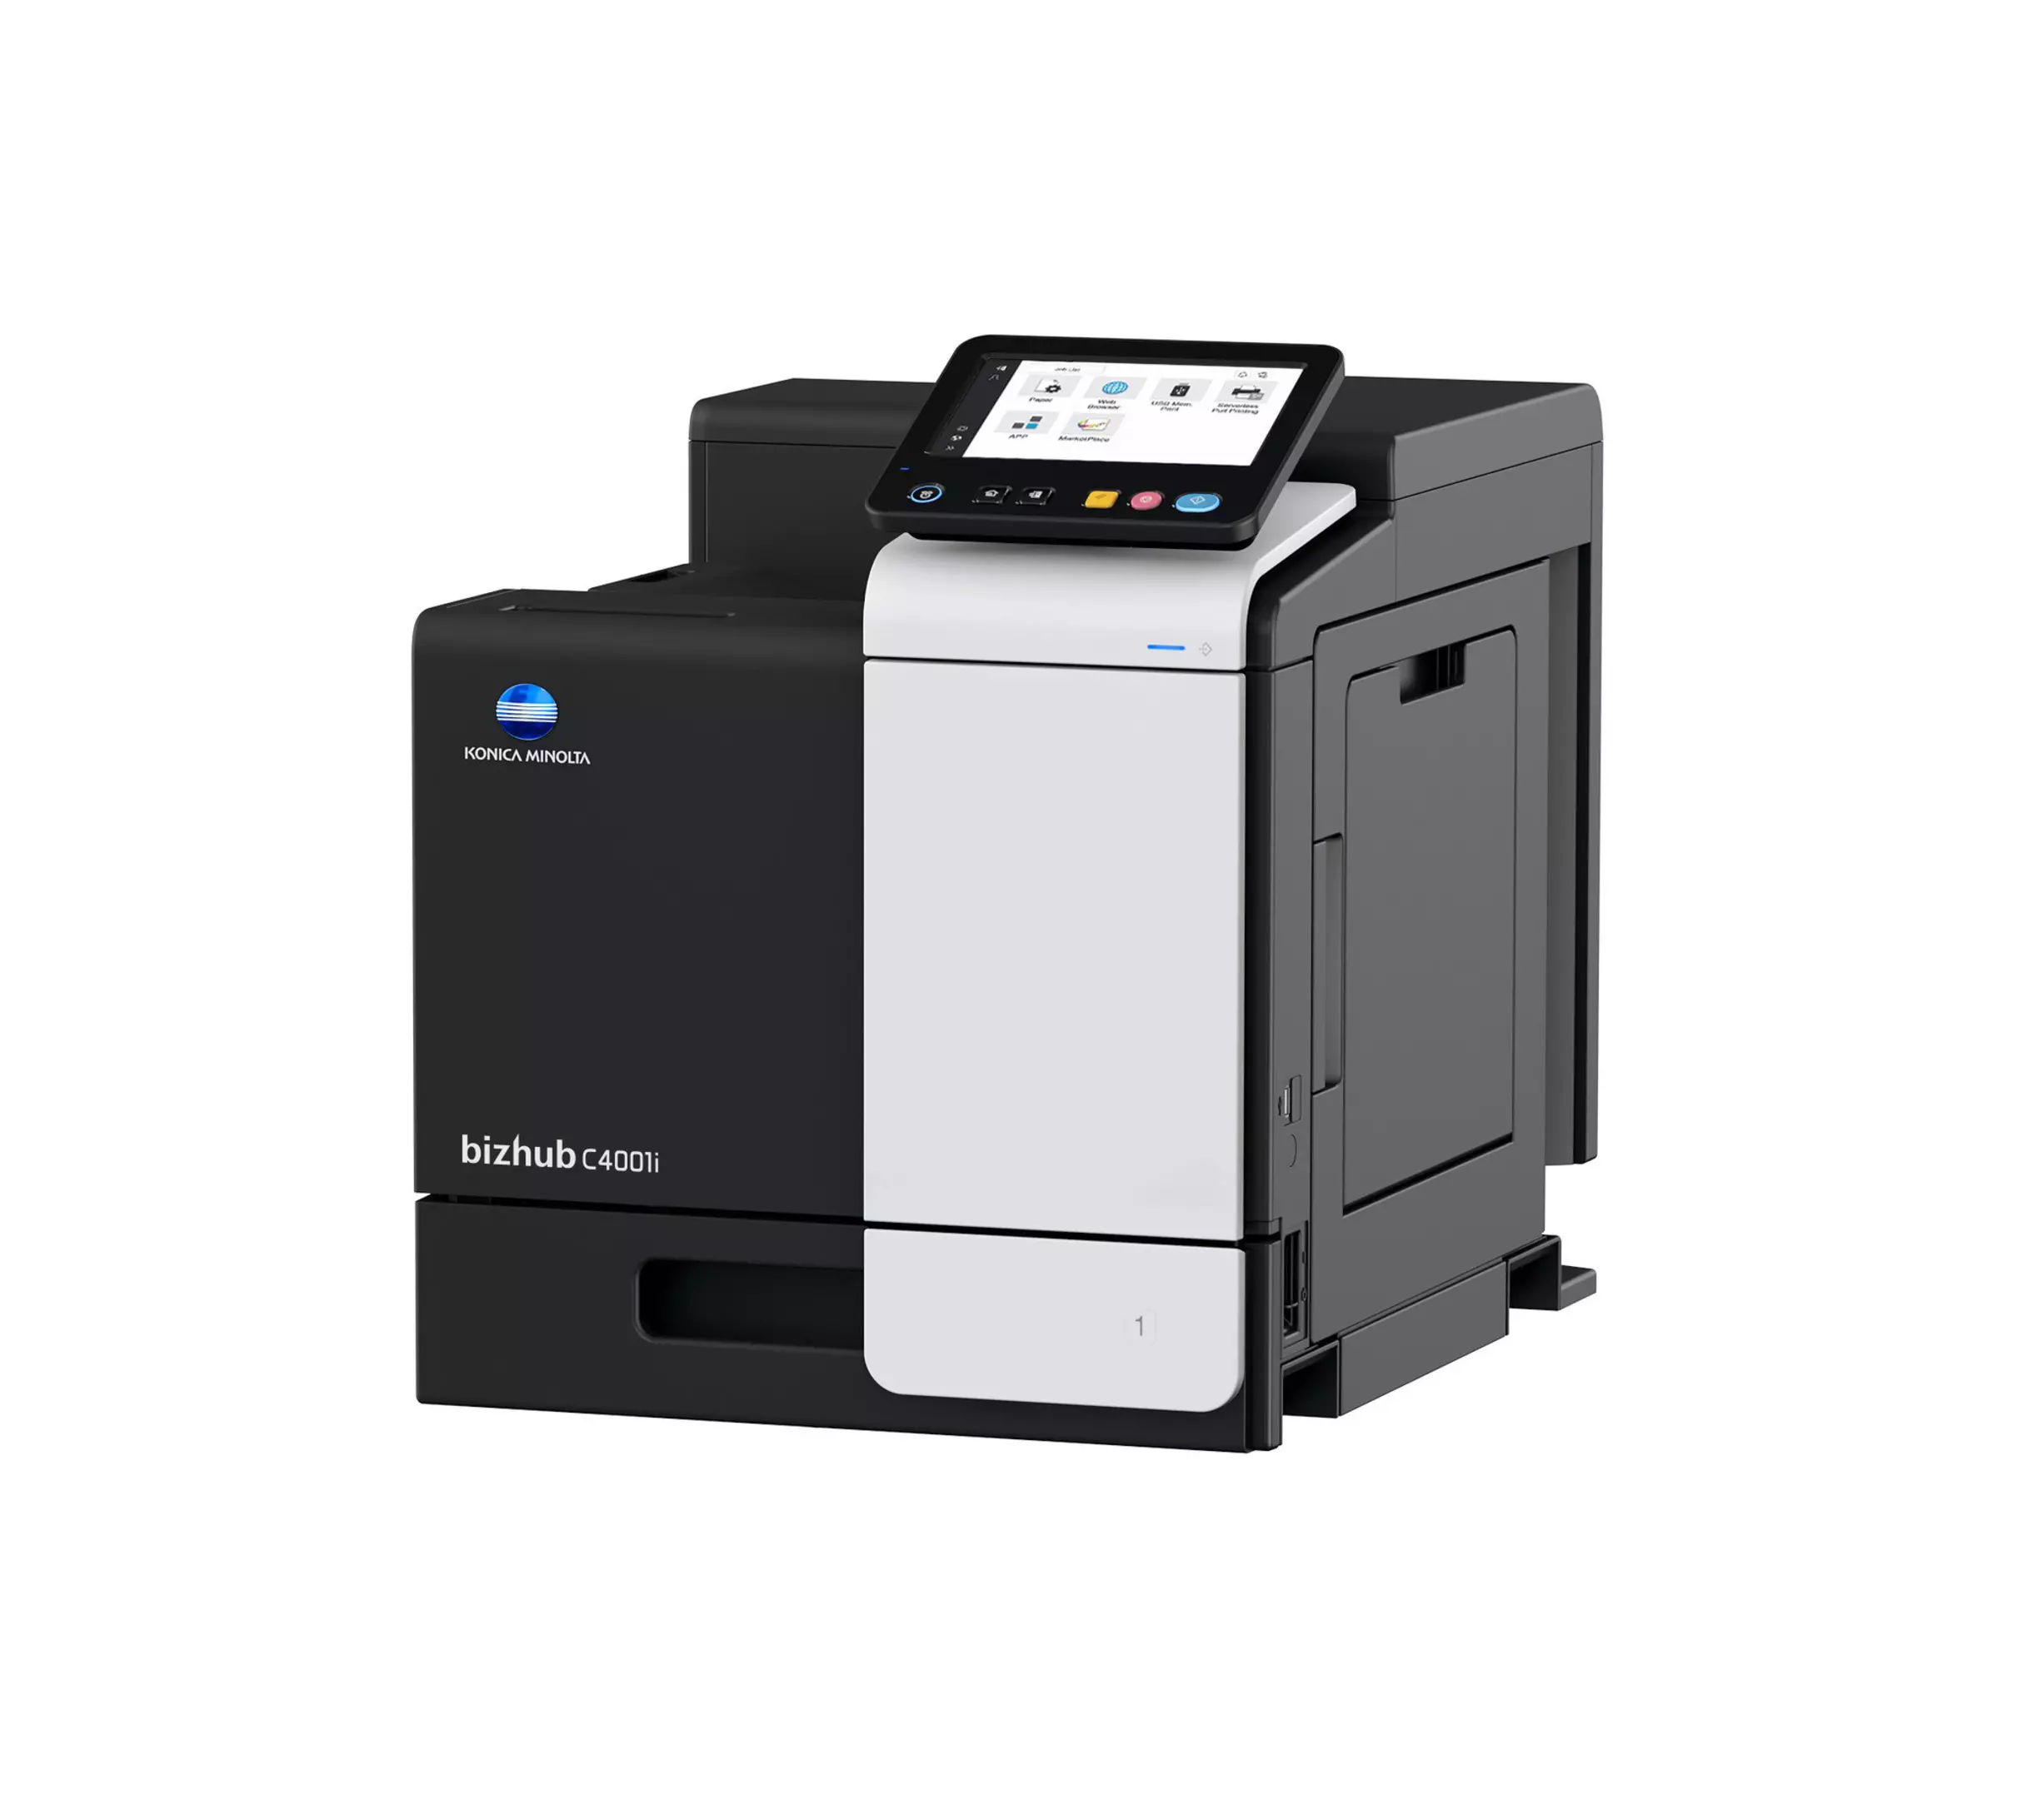 Konica Minolta i-series bizhub C4001i multifunctional printer